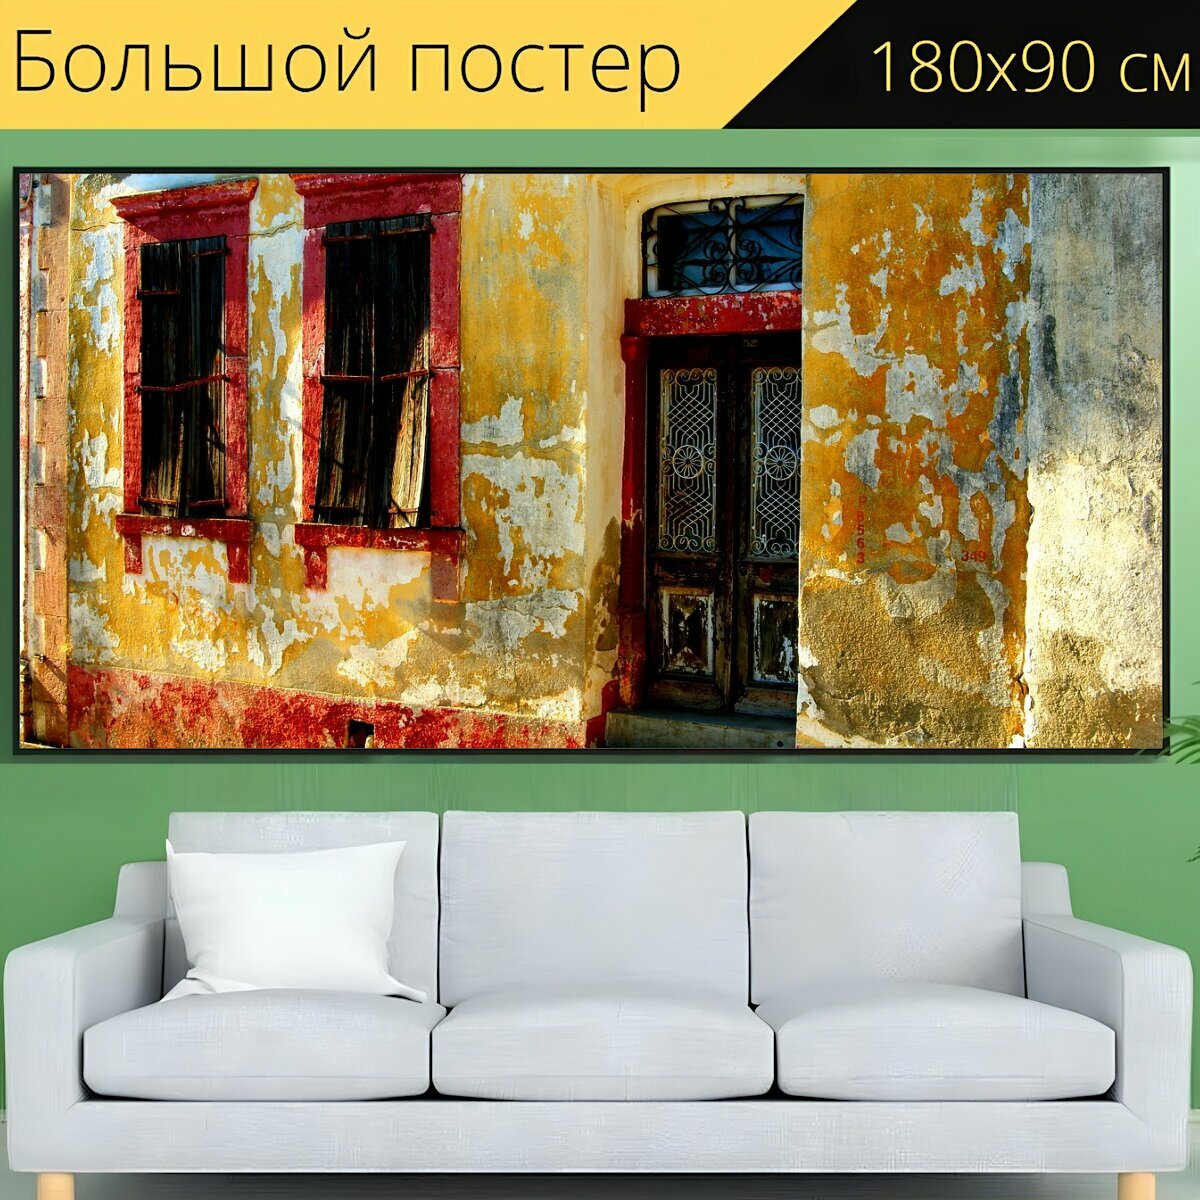 Большой постер "Старый, архитектура, окно" 180 x 90 см. для интерьера